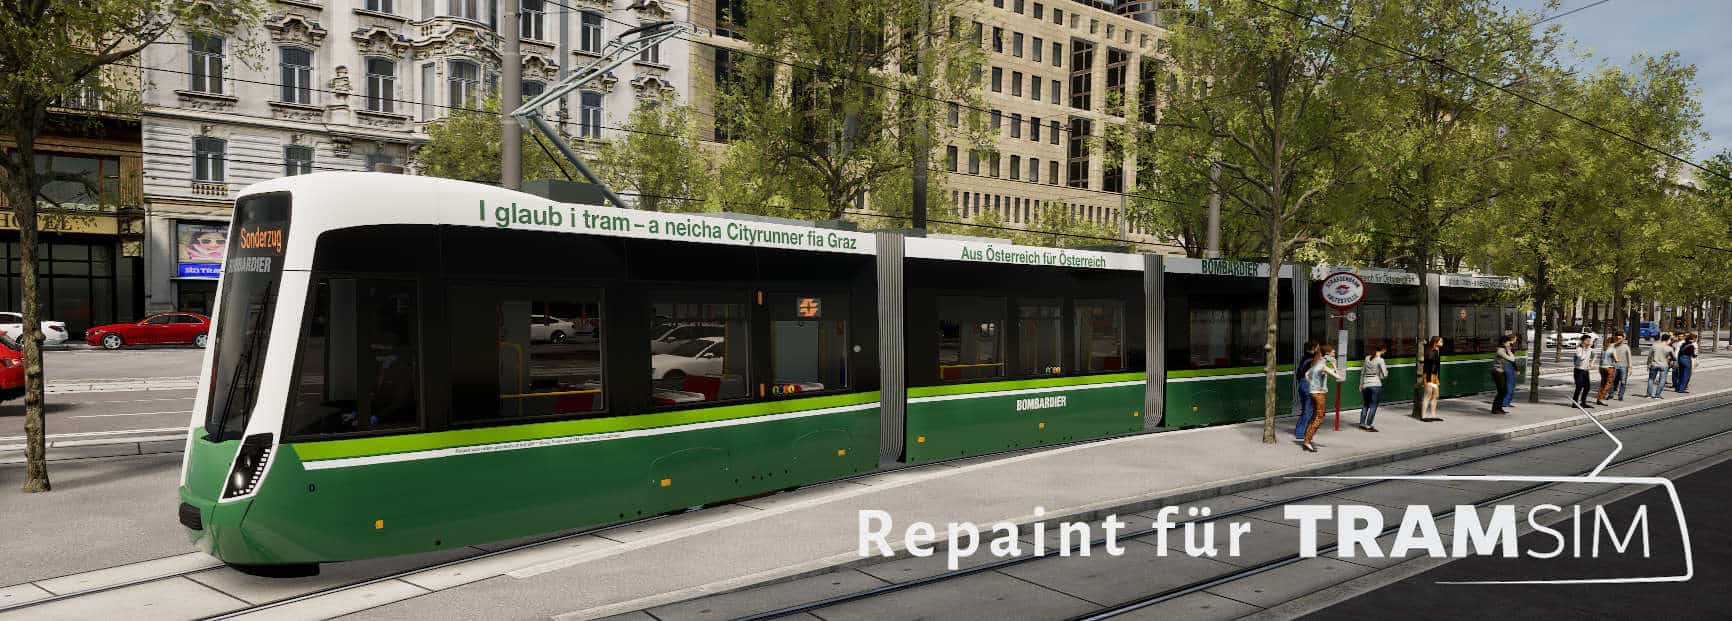 Graz Repaint für TramSim